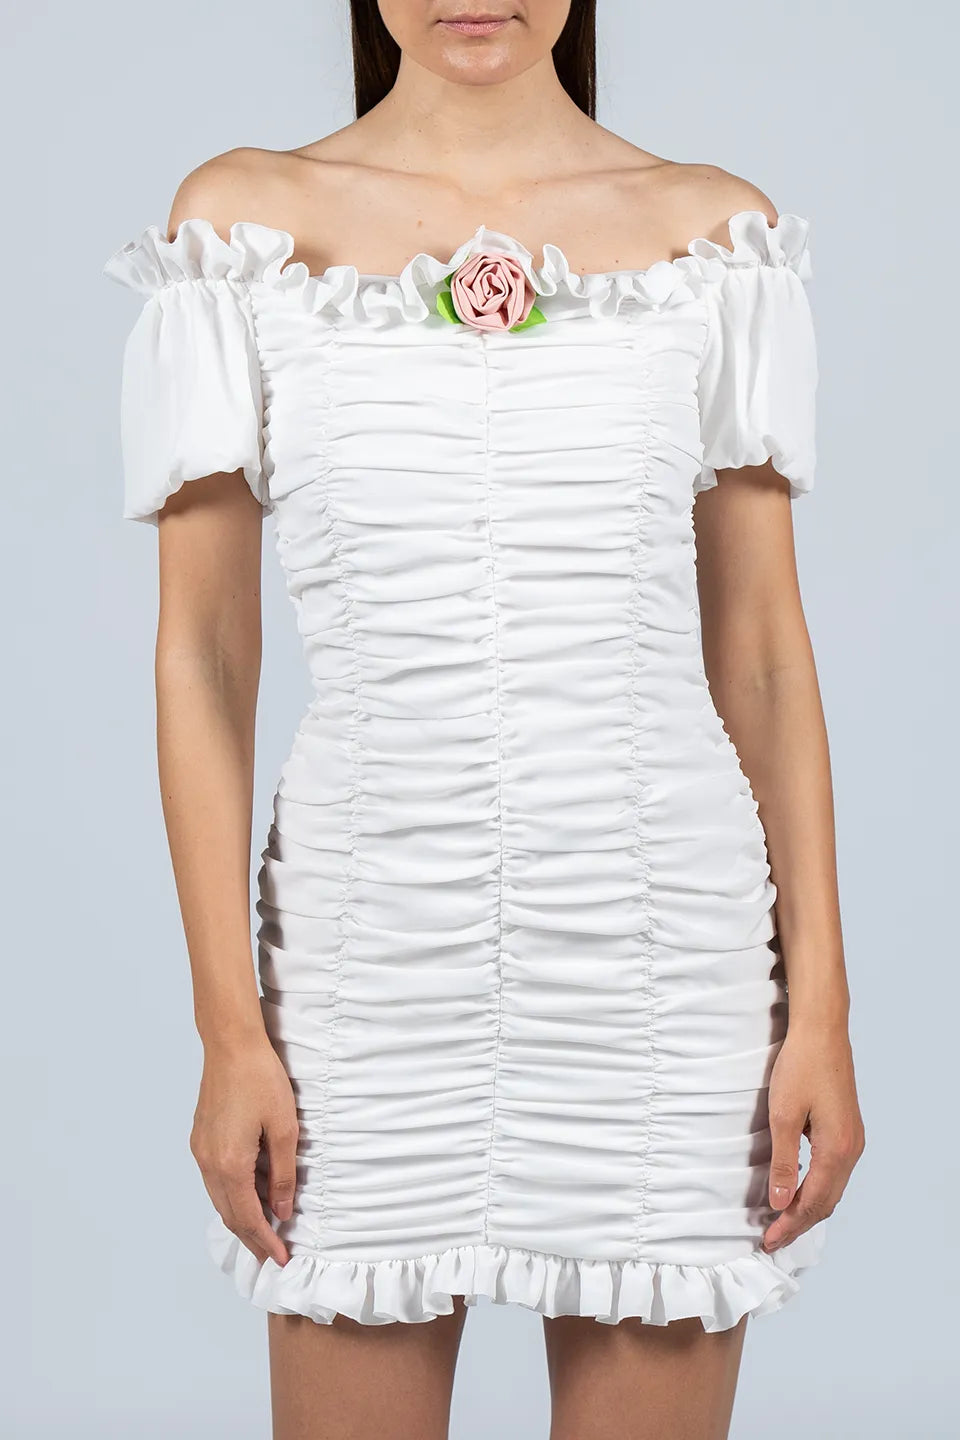 Shop online trendy White Mini dresses from Vivetta Fashion designer. Product gallery 1